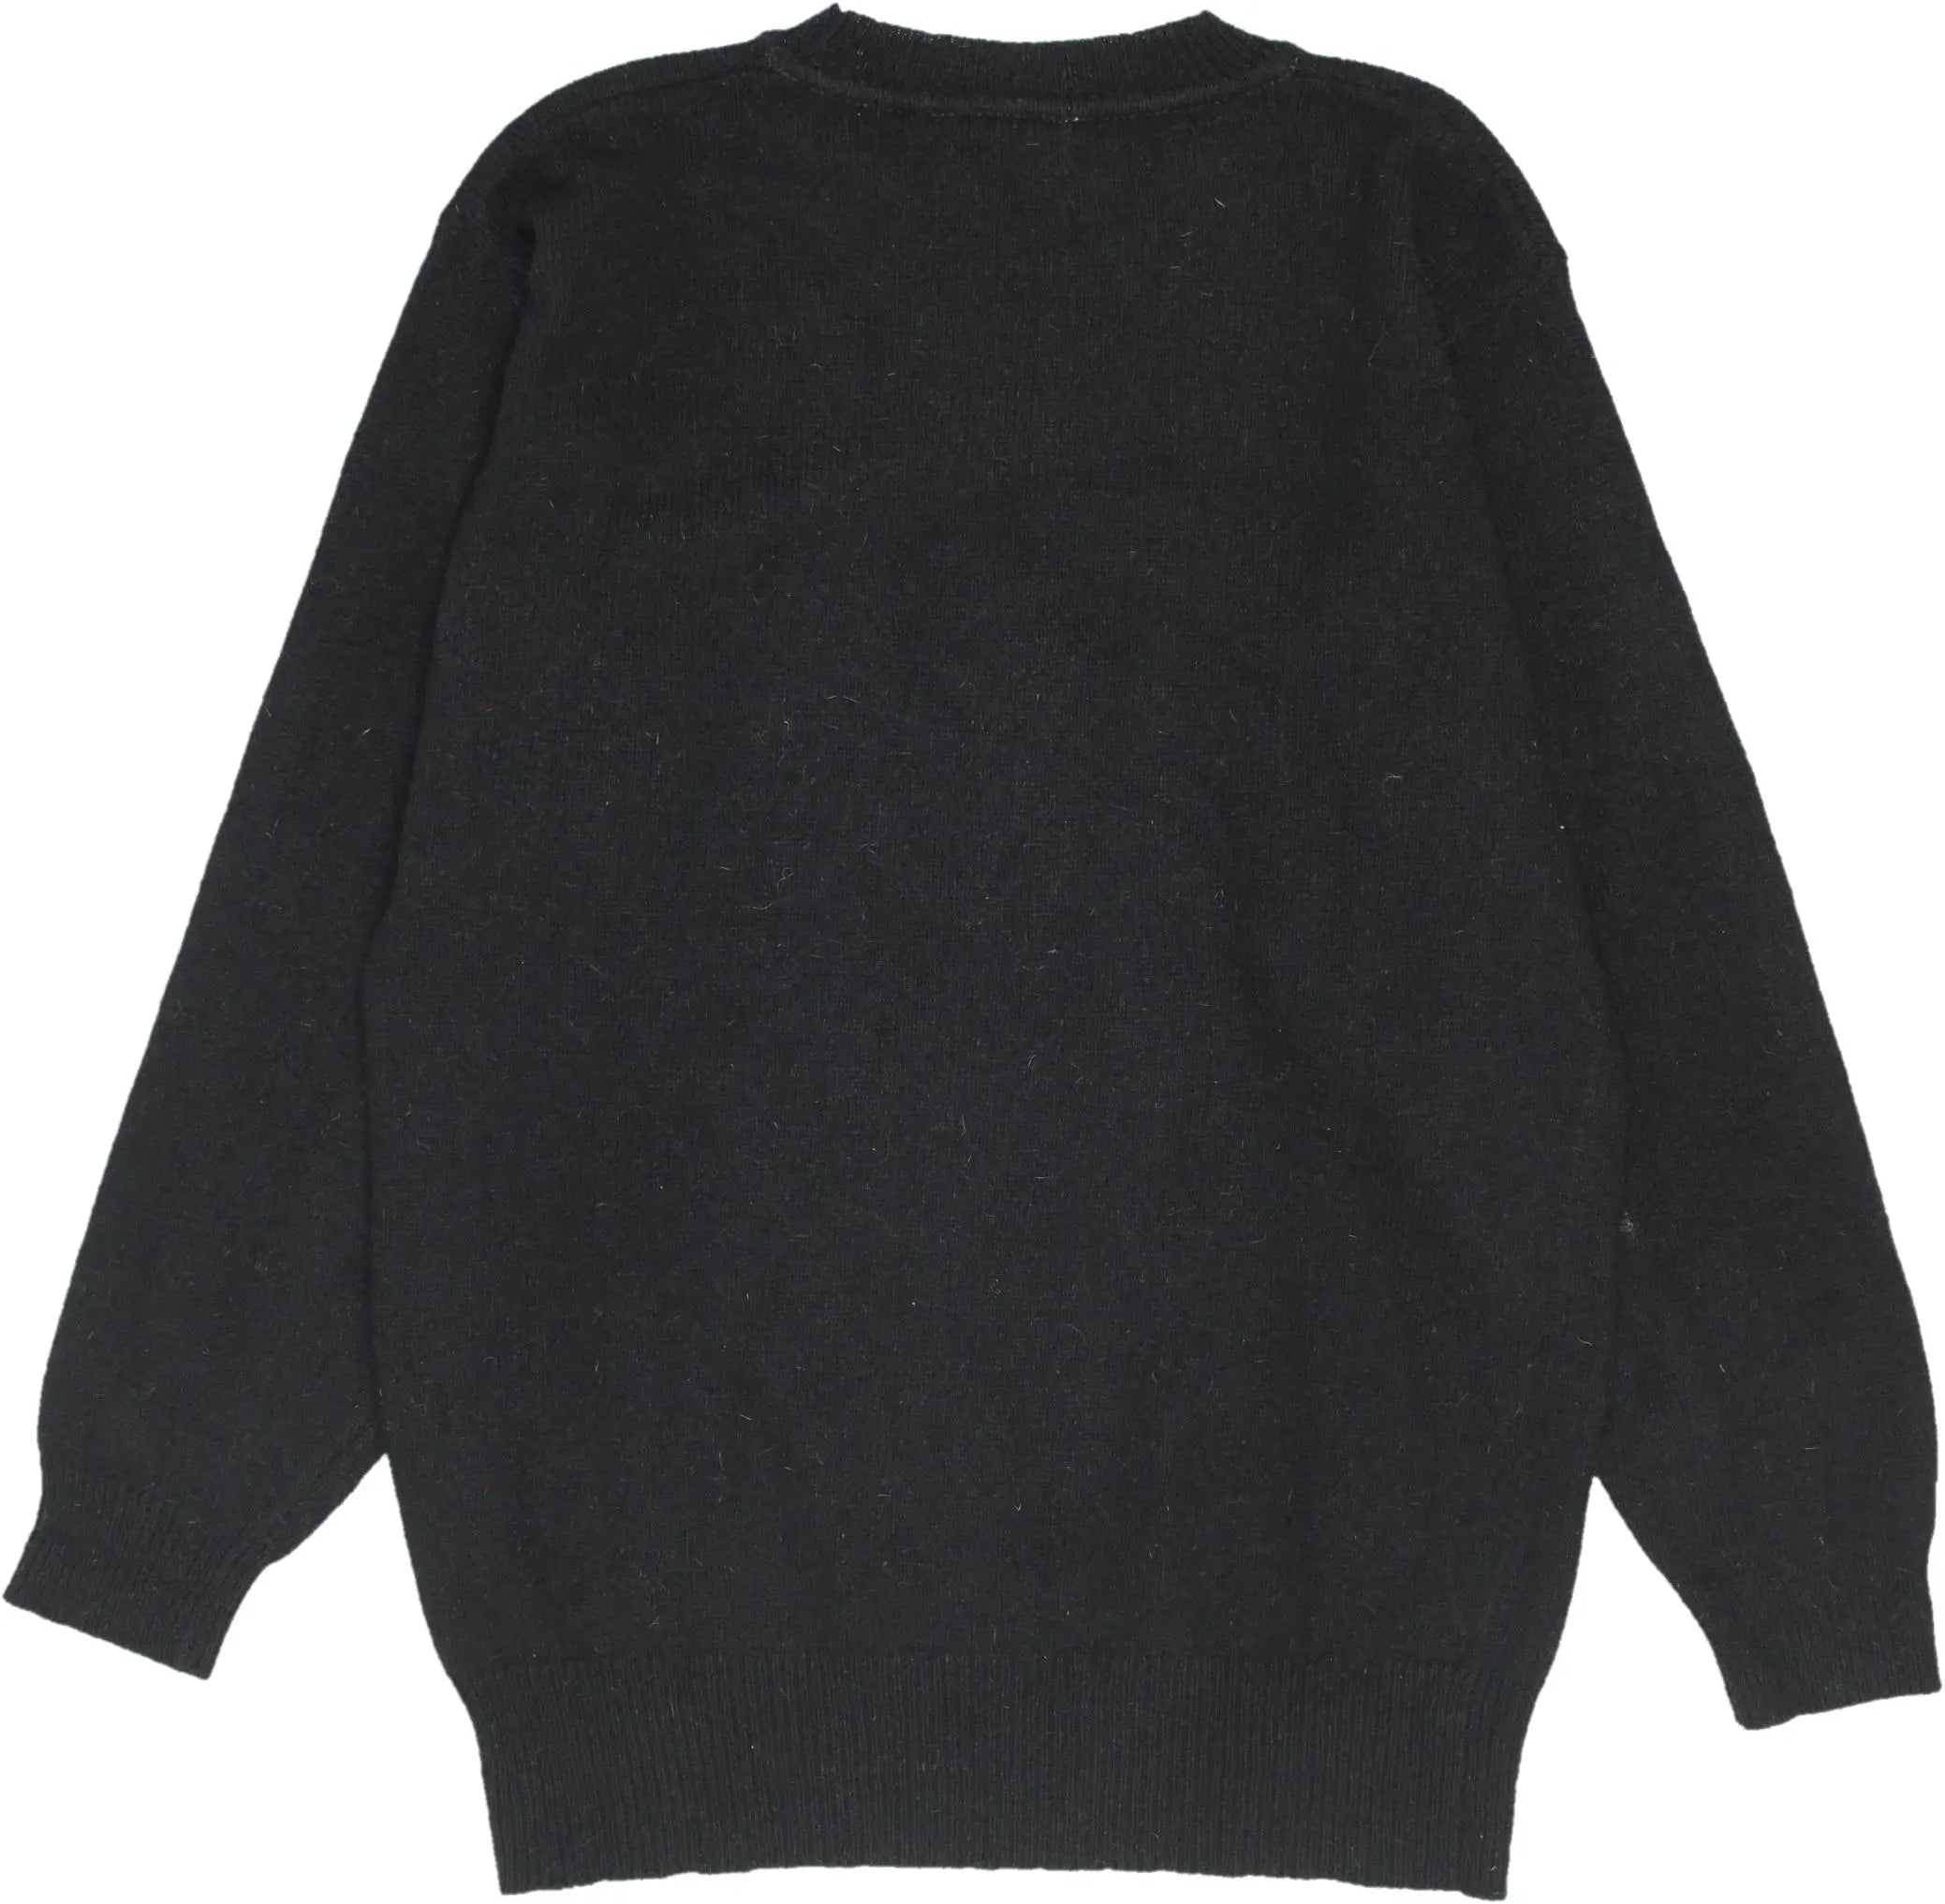 Nuova Moda - Wool Blend Embilleshed Jumper- ThriftTale.com - Vintage and second handclothing